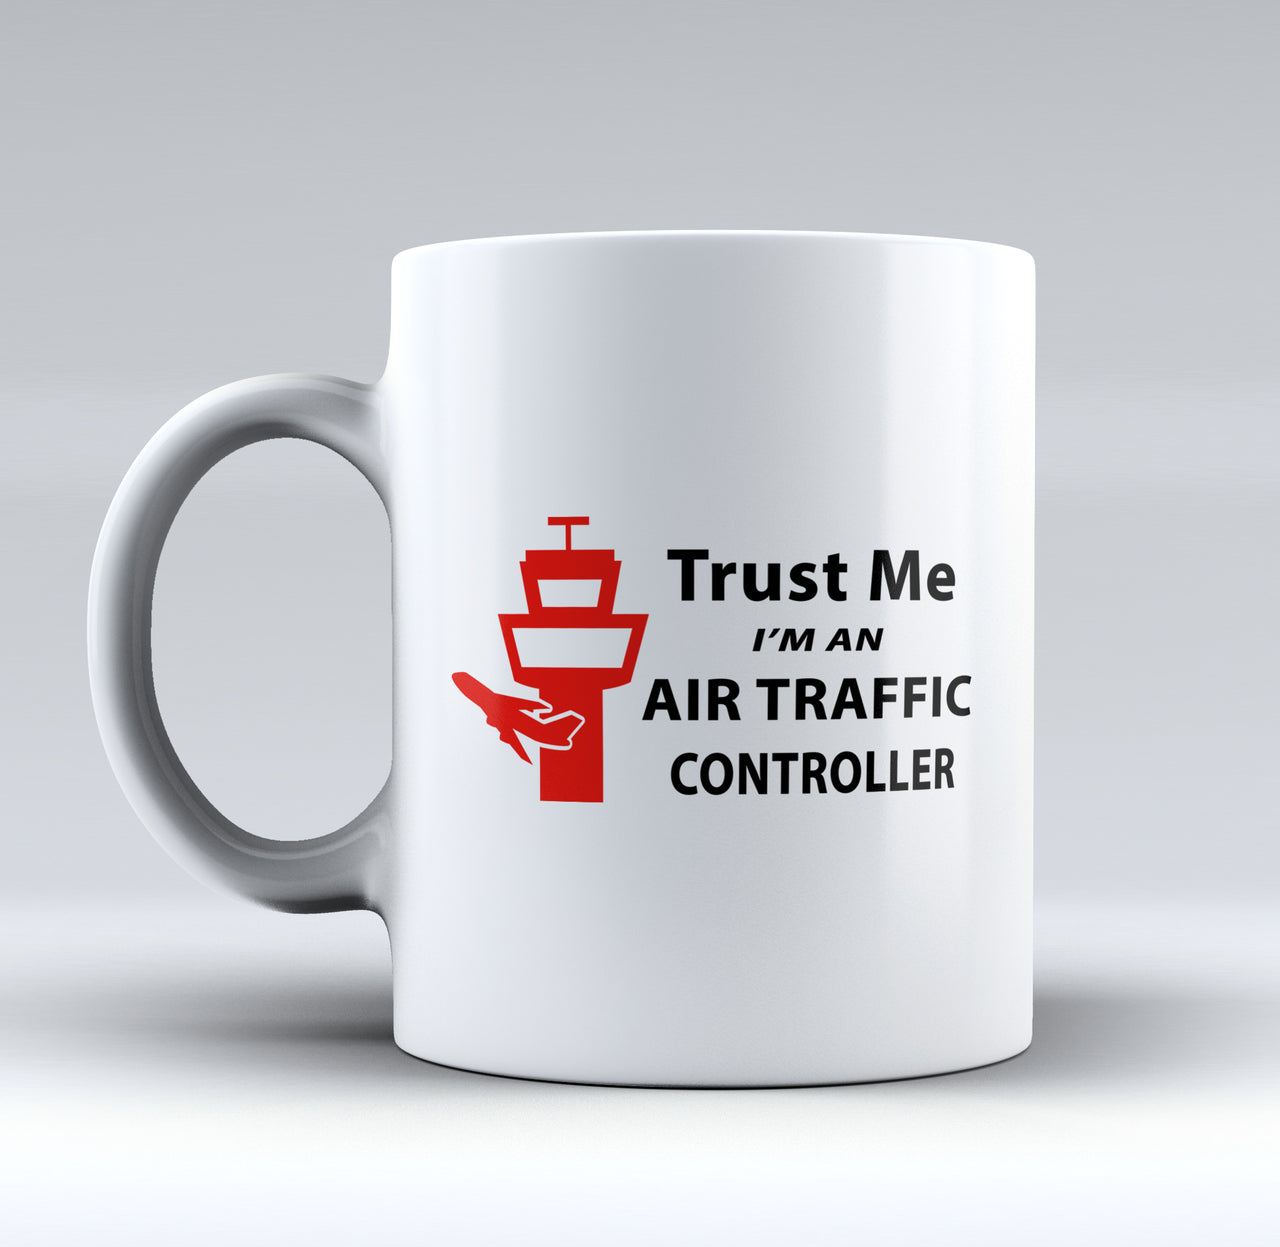 Trust Me I'm an Air Traffic Controller Designed Mugs